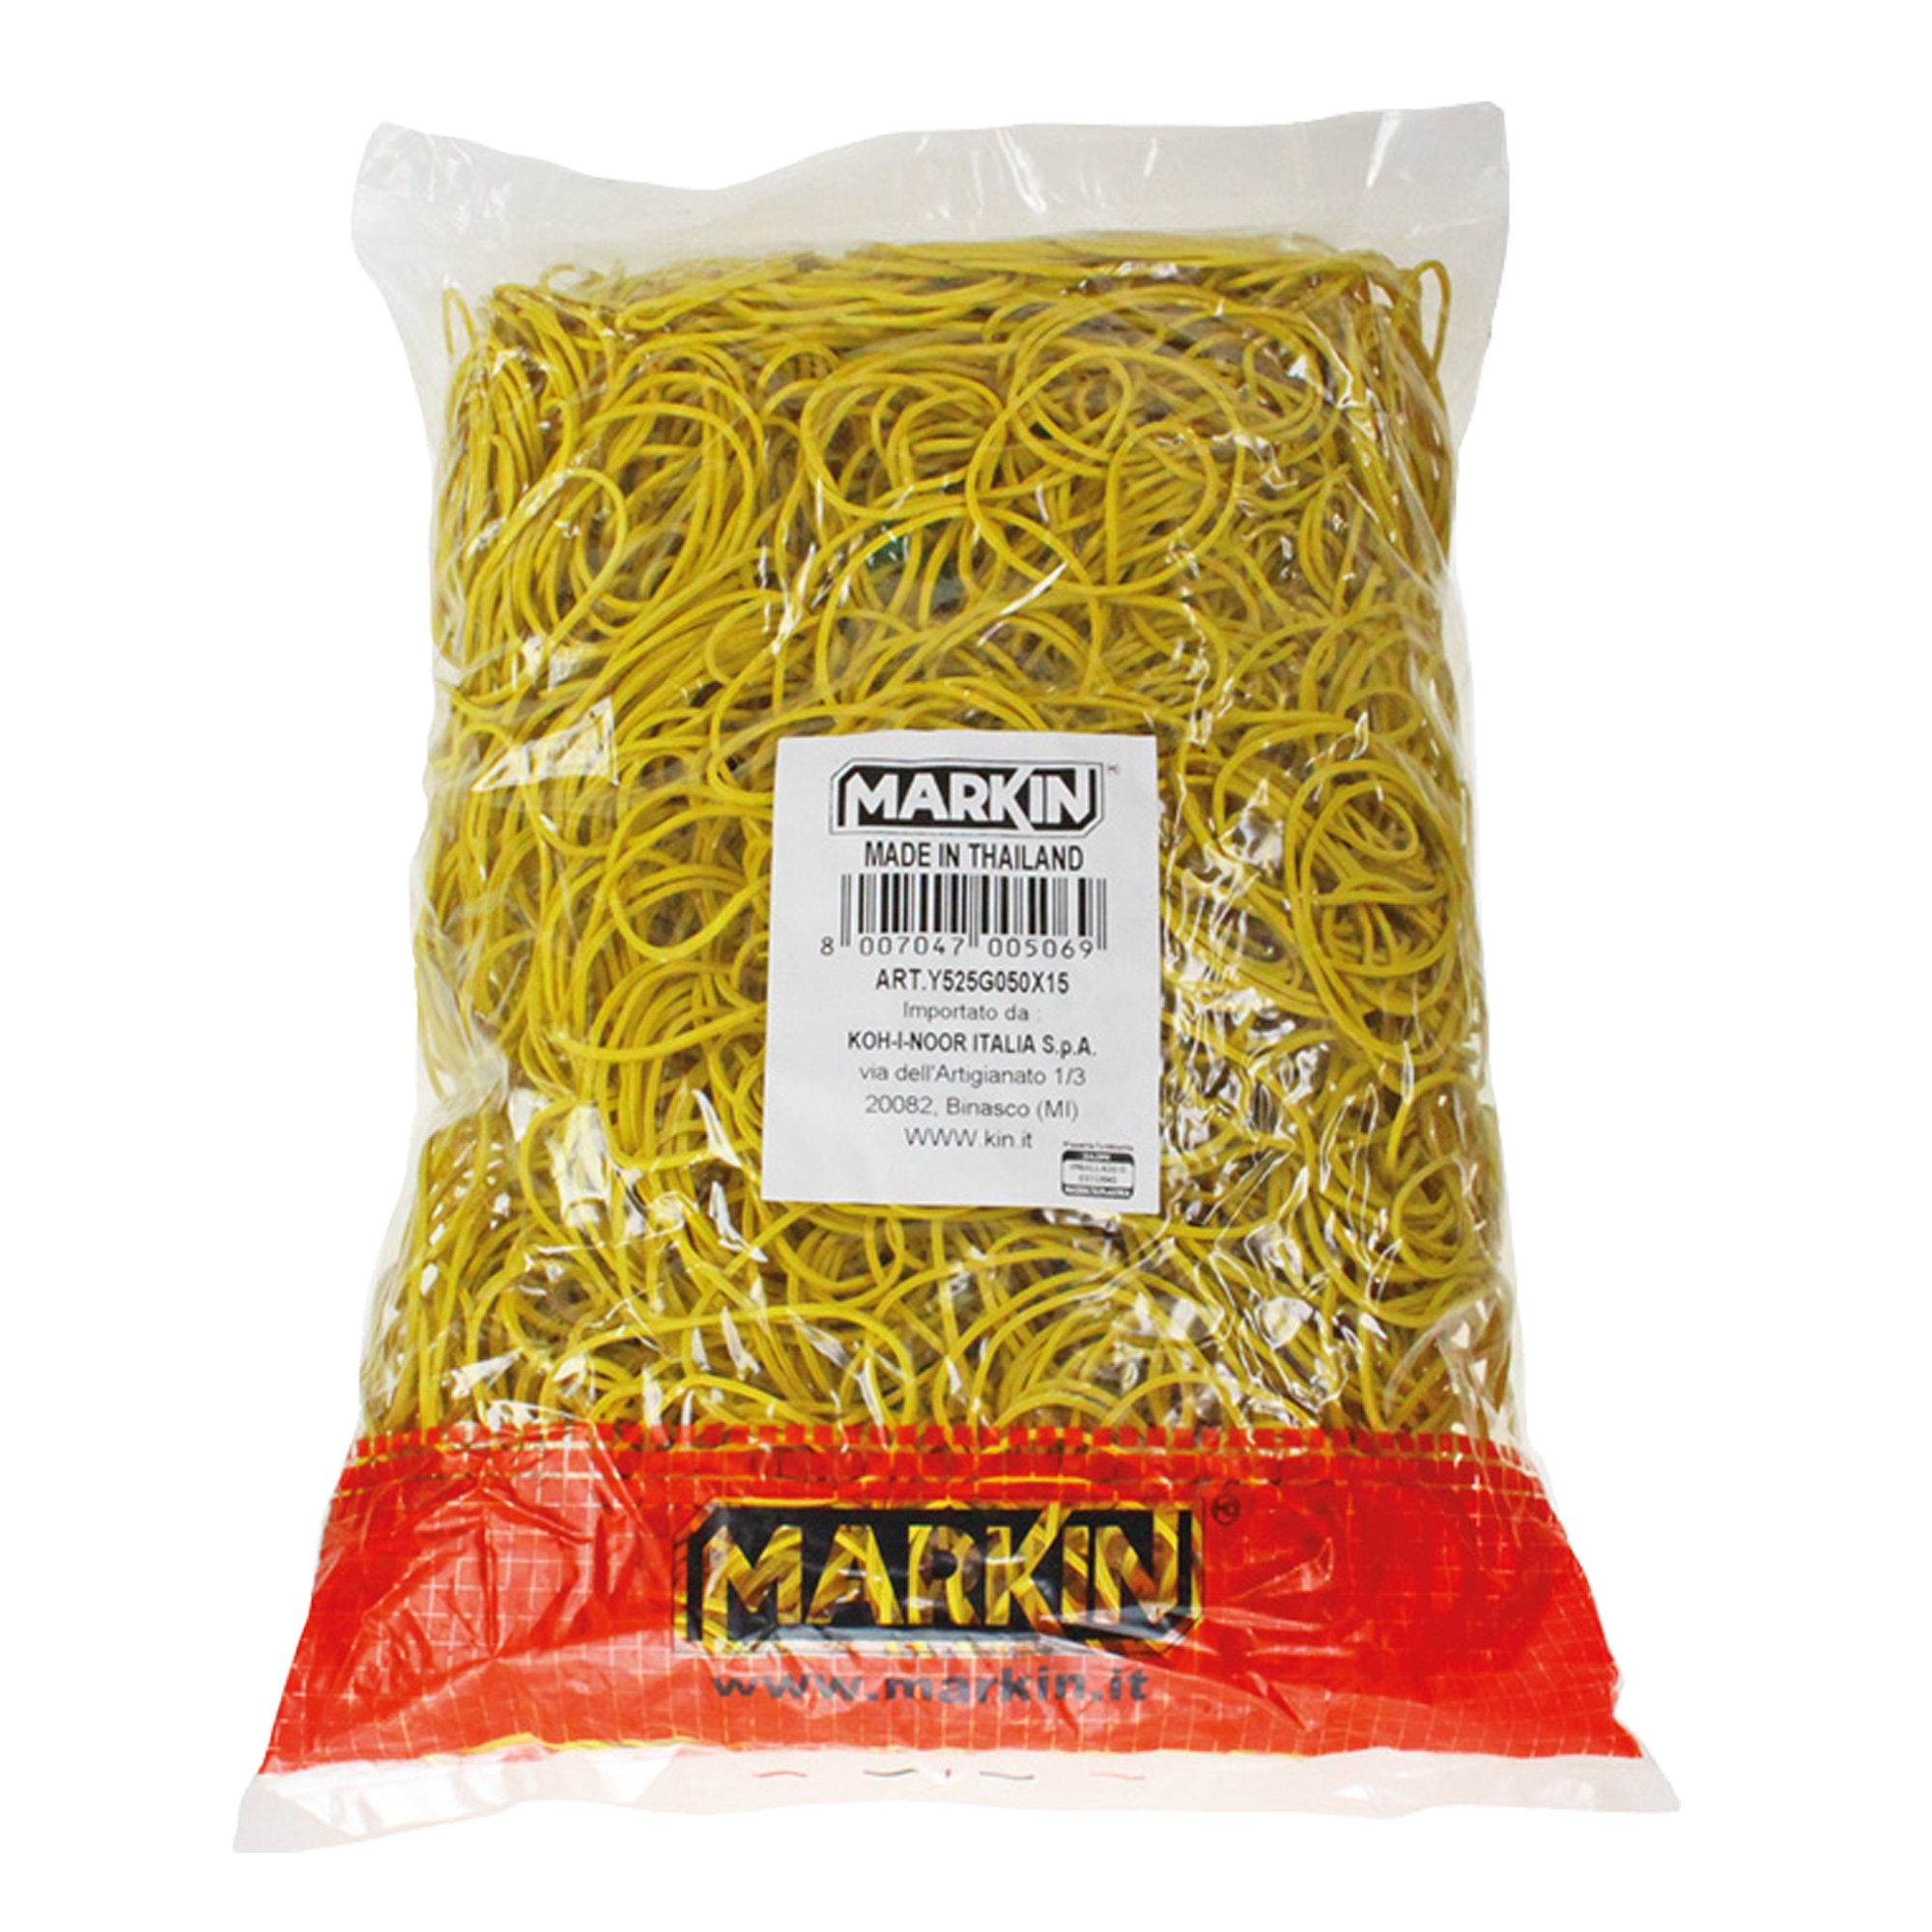 markin-elastico-gomma-giallo-d70-sacco-1kg